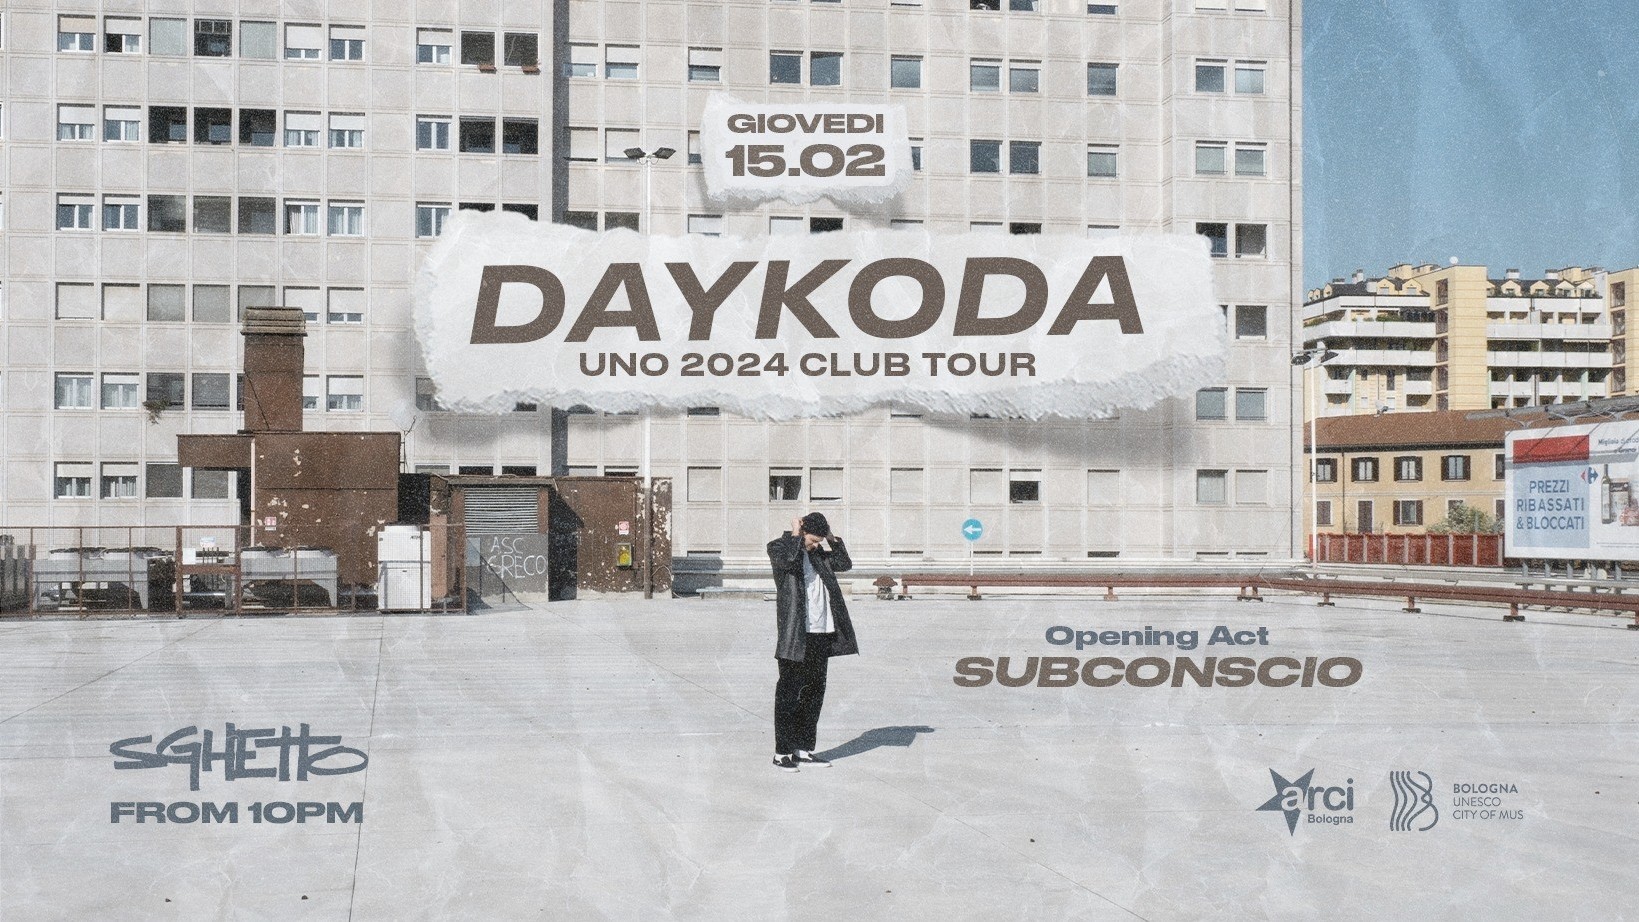 DayKoda + Subconscio "Uno 2024 Club Tour"